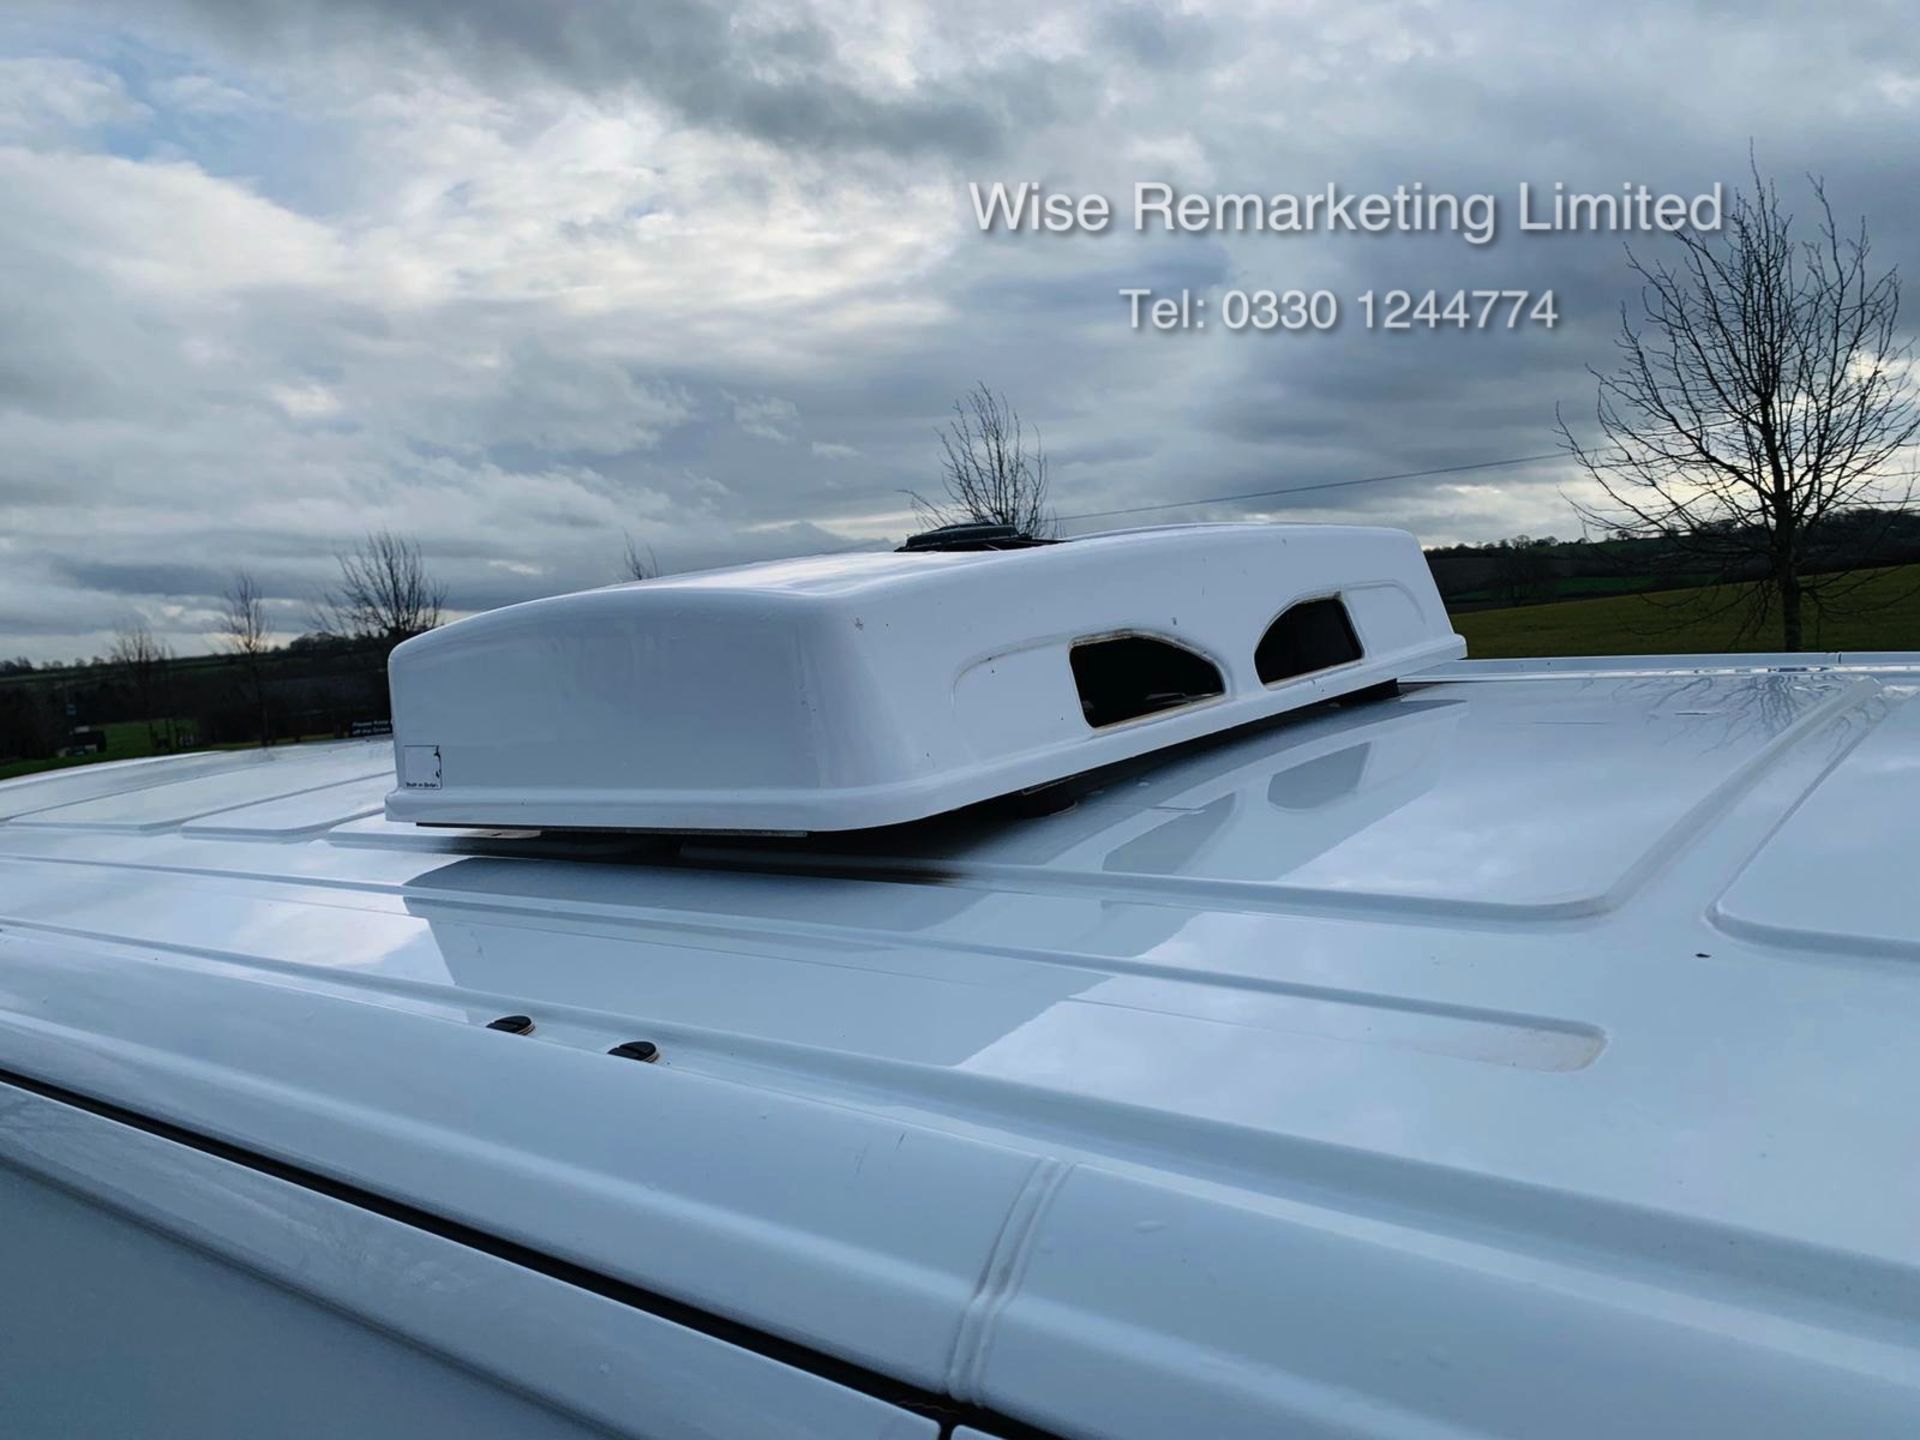 (RESERVE MET) Mercedes Vito 114 2.1 CDI Bluetech Fridge/Chiller Van - 2017 Model - Sat Nav - - Image 10 of 22